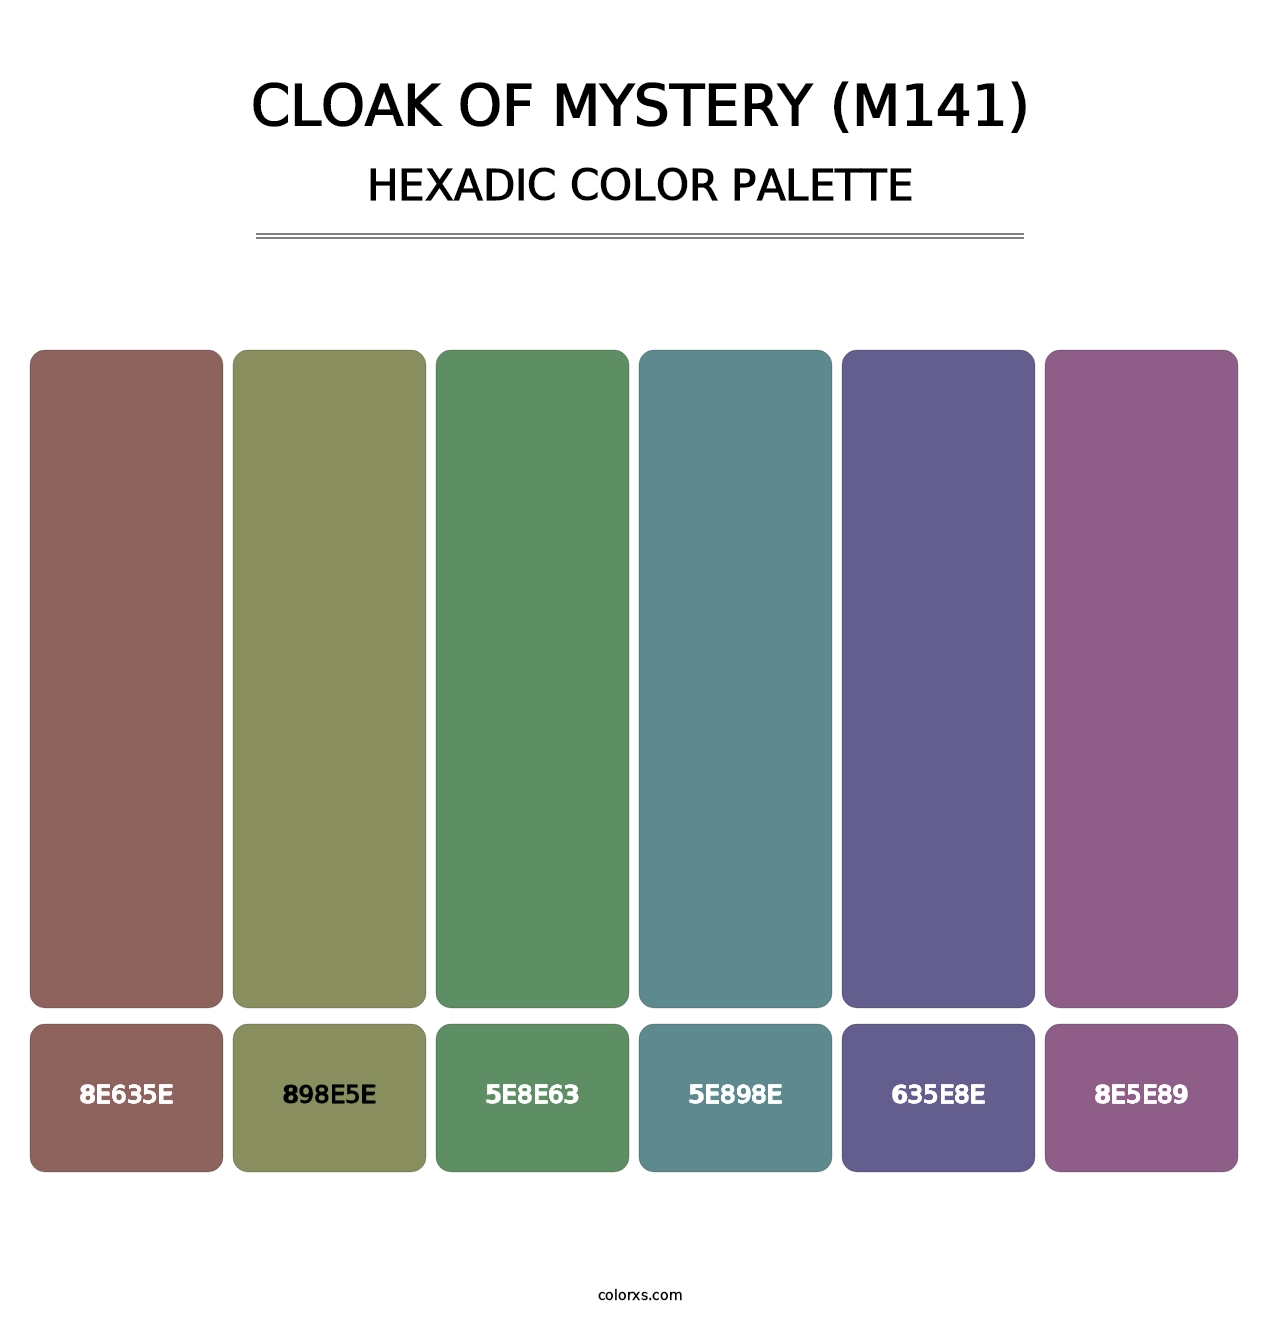 Cloak of Mystery (M141) - Hexadic Color Palette